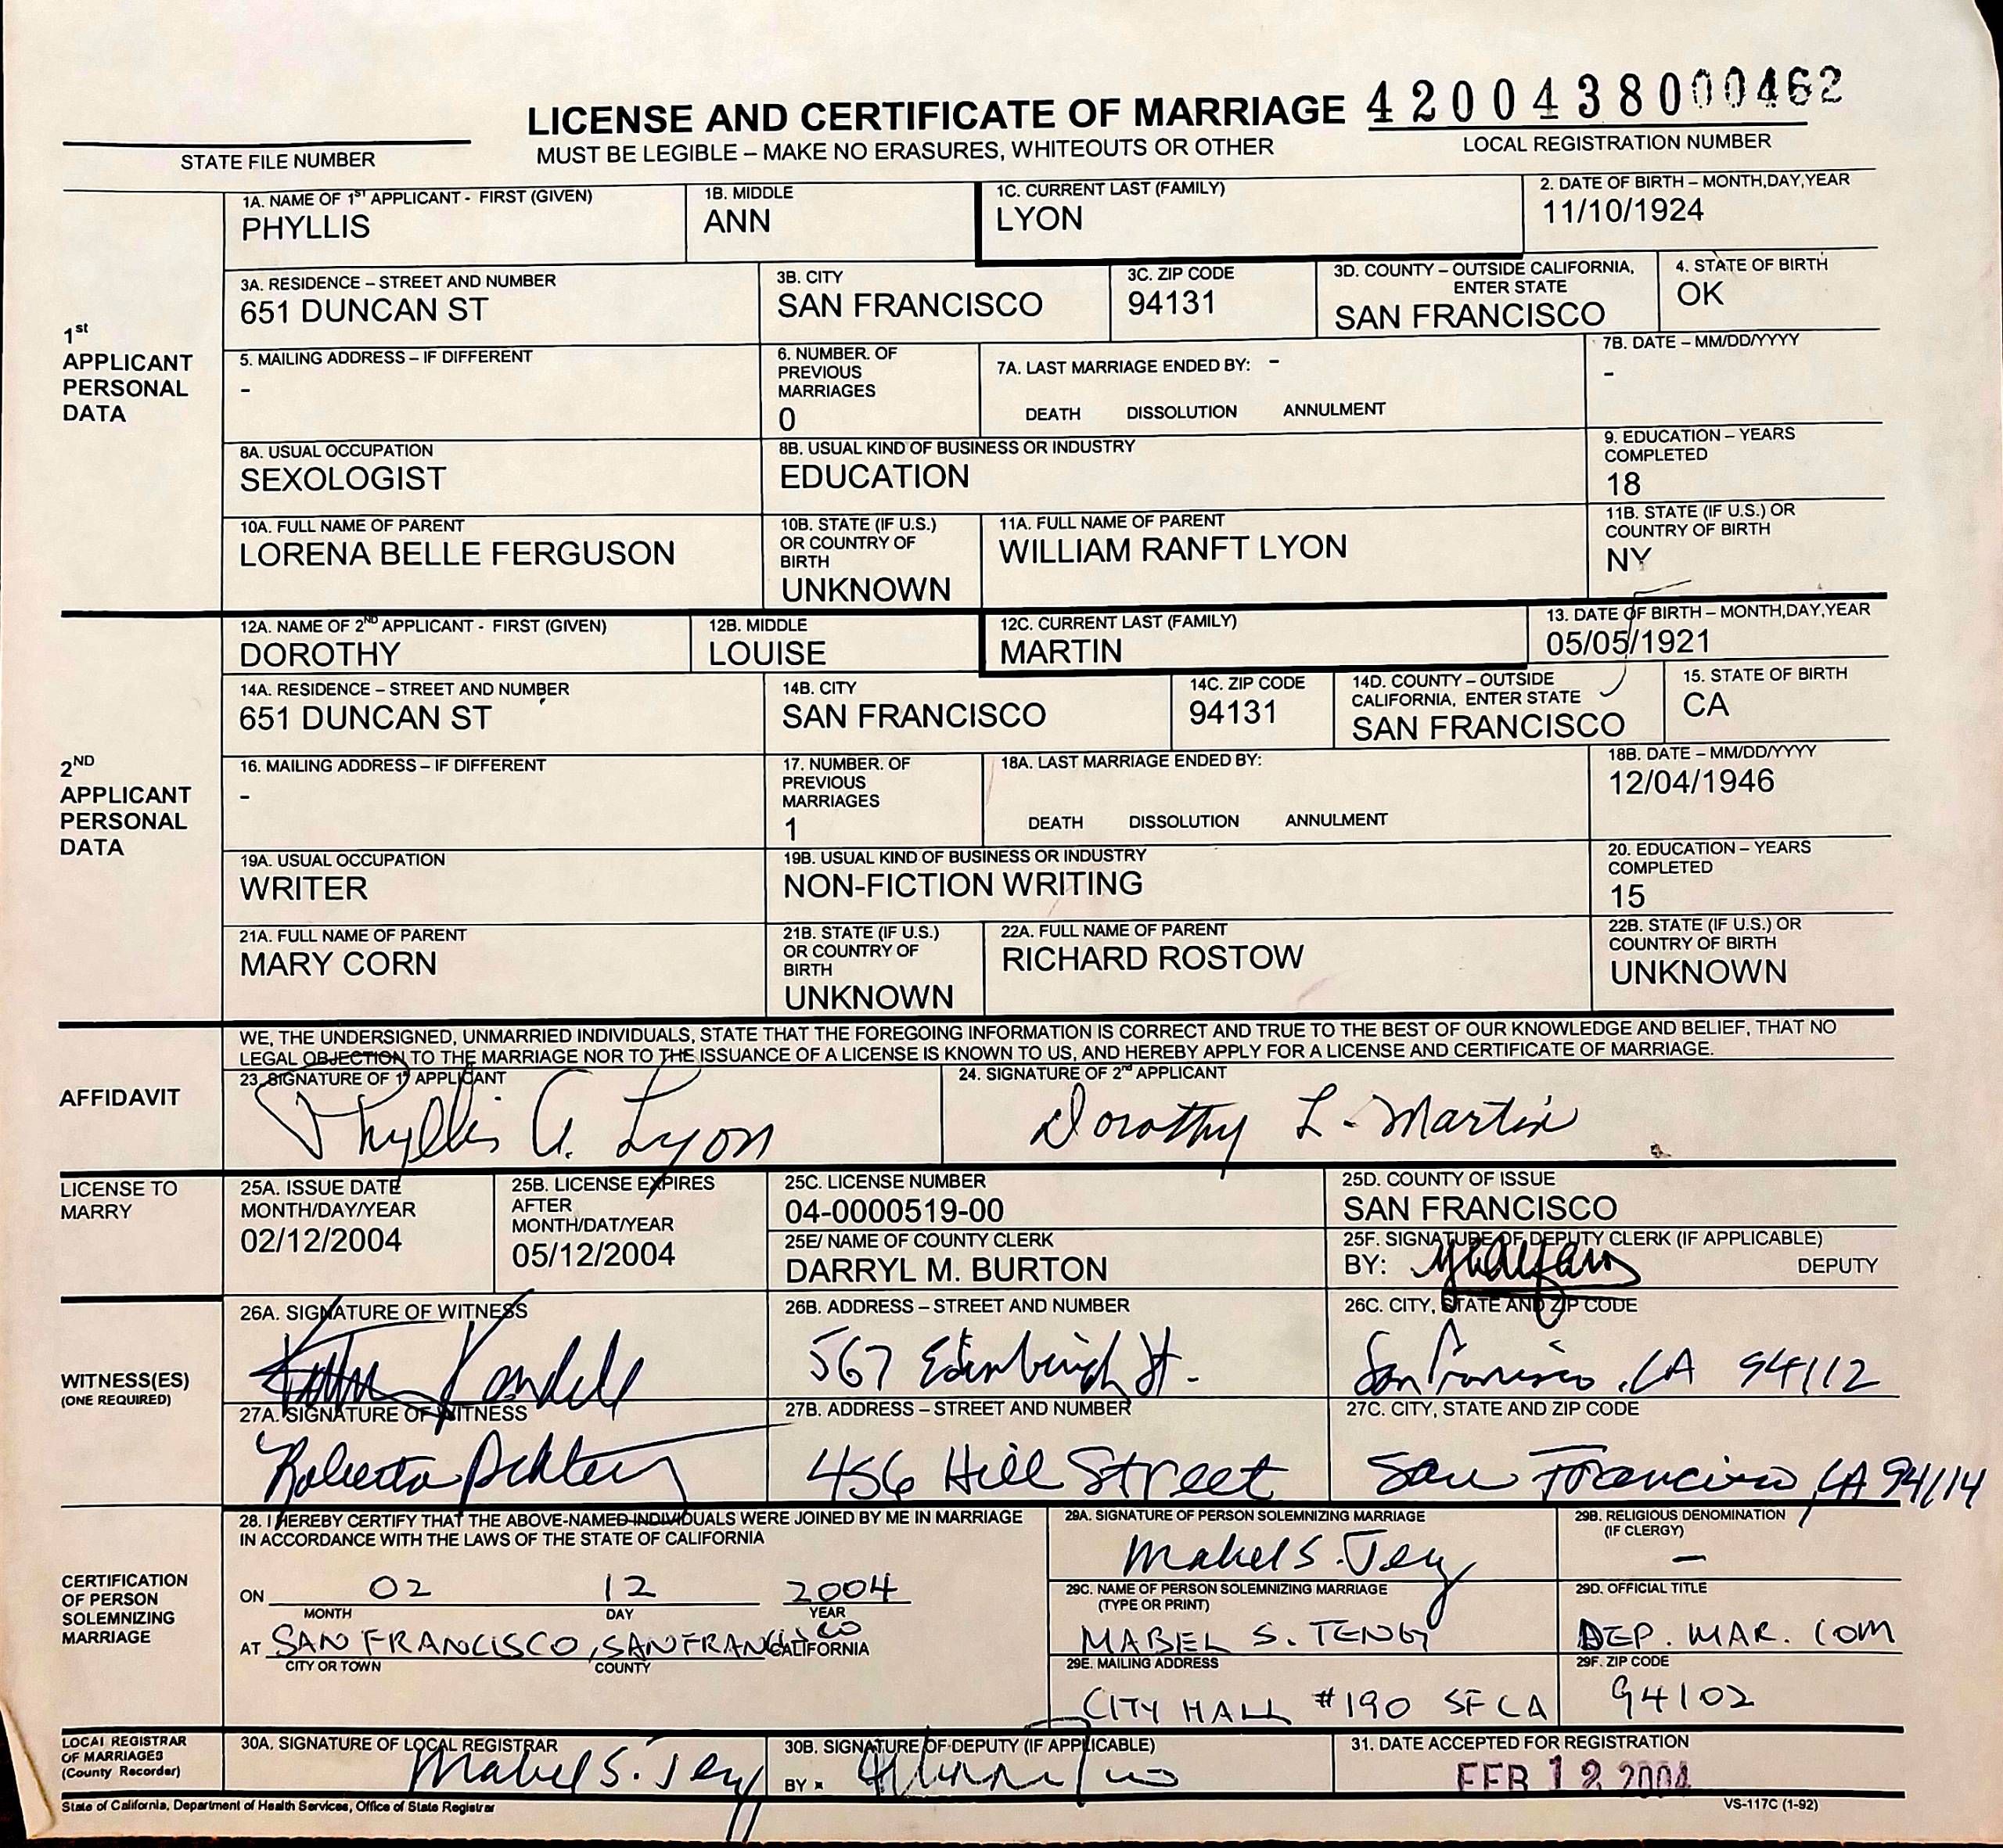 A 2004 San Francisco marriage license.